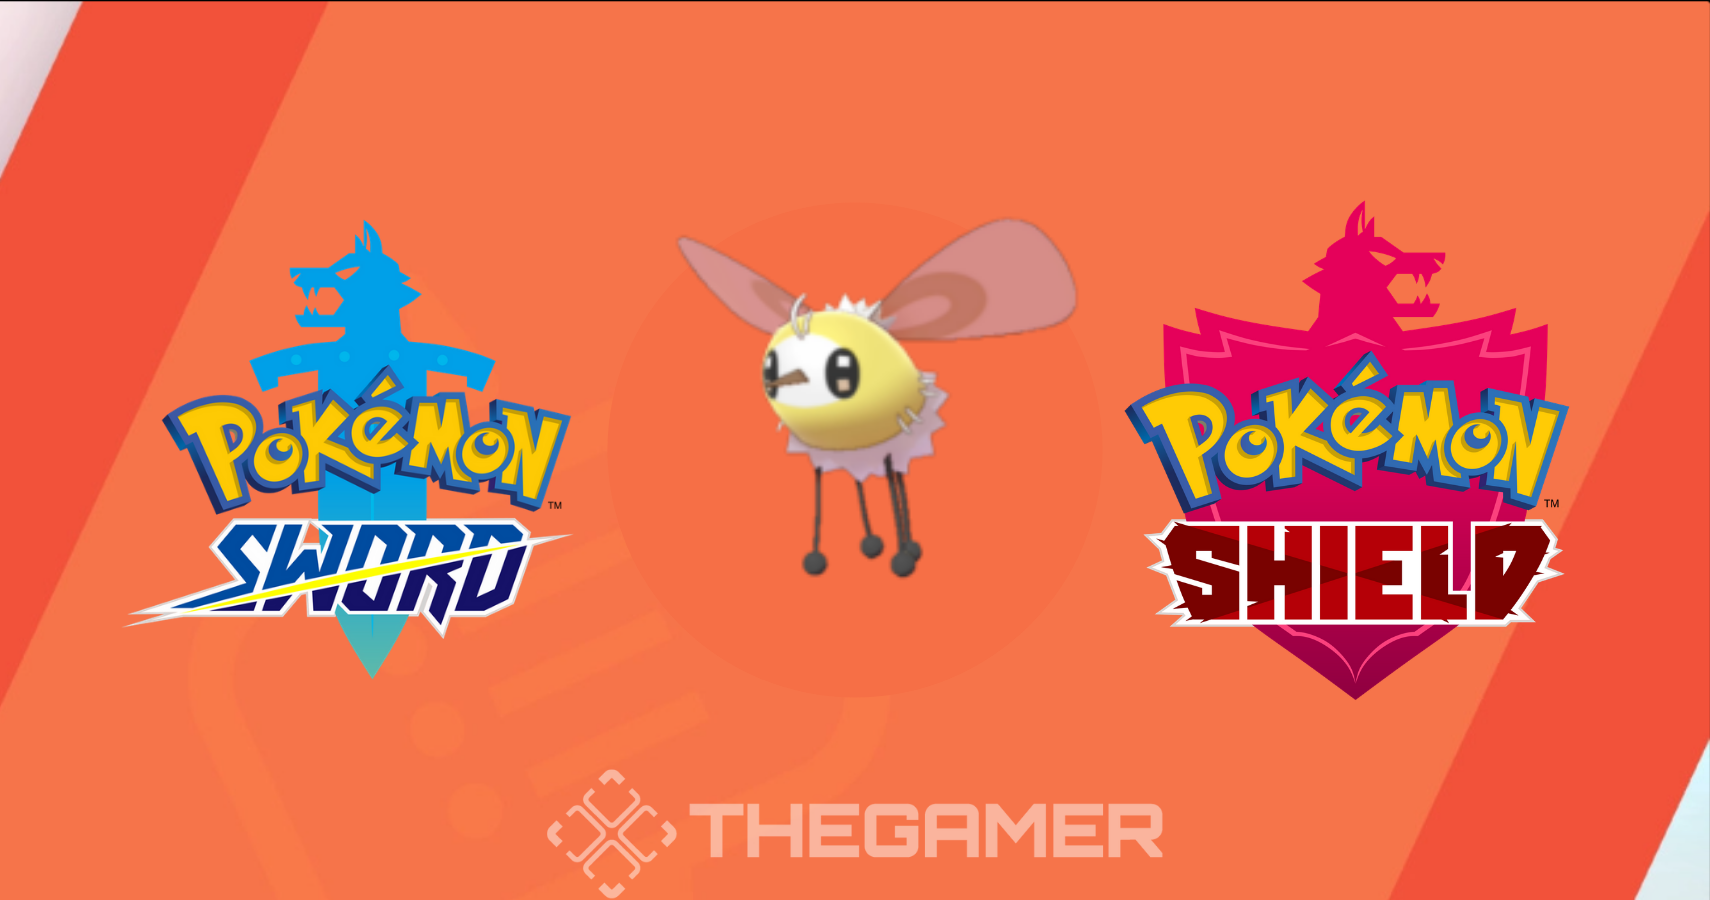 Pokémon Sword & Shield: How To Find & Evolve Shellder Into Cloyster